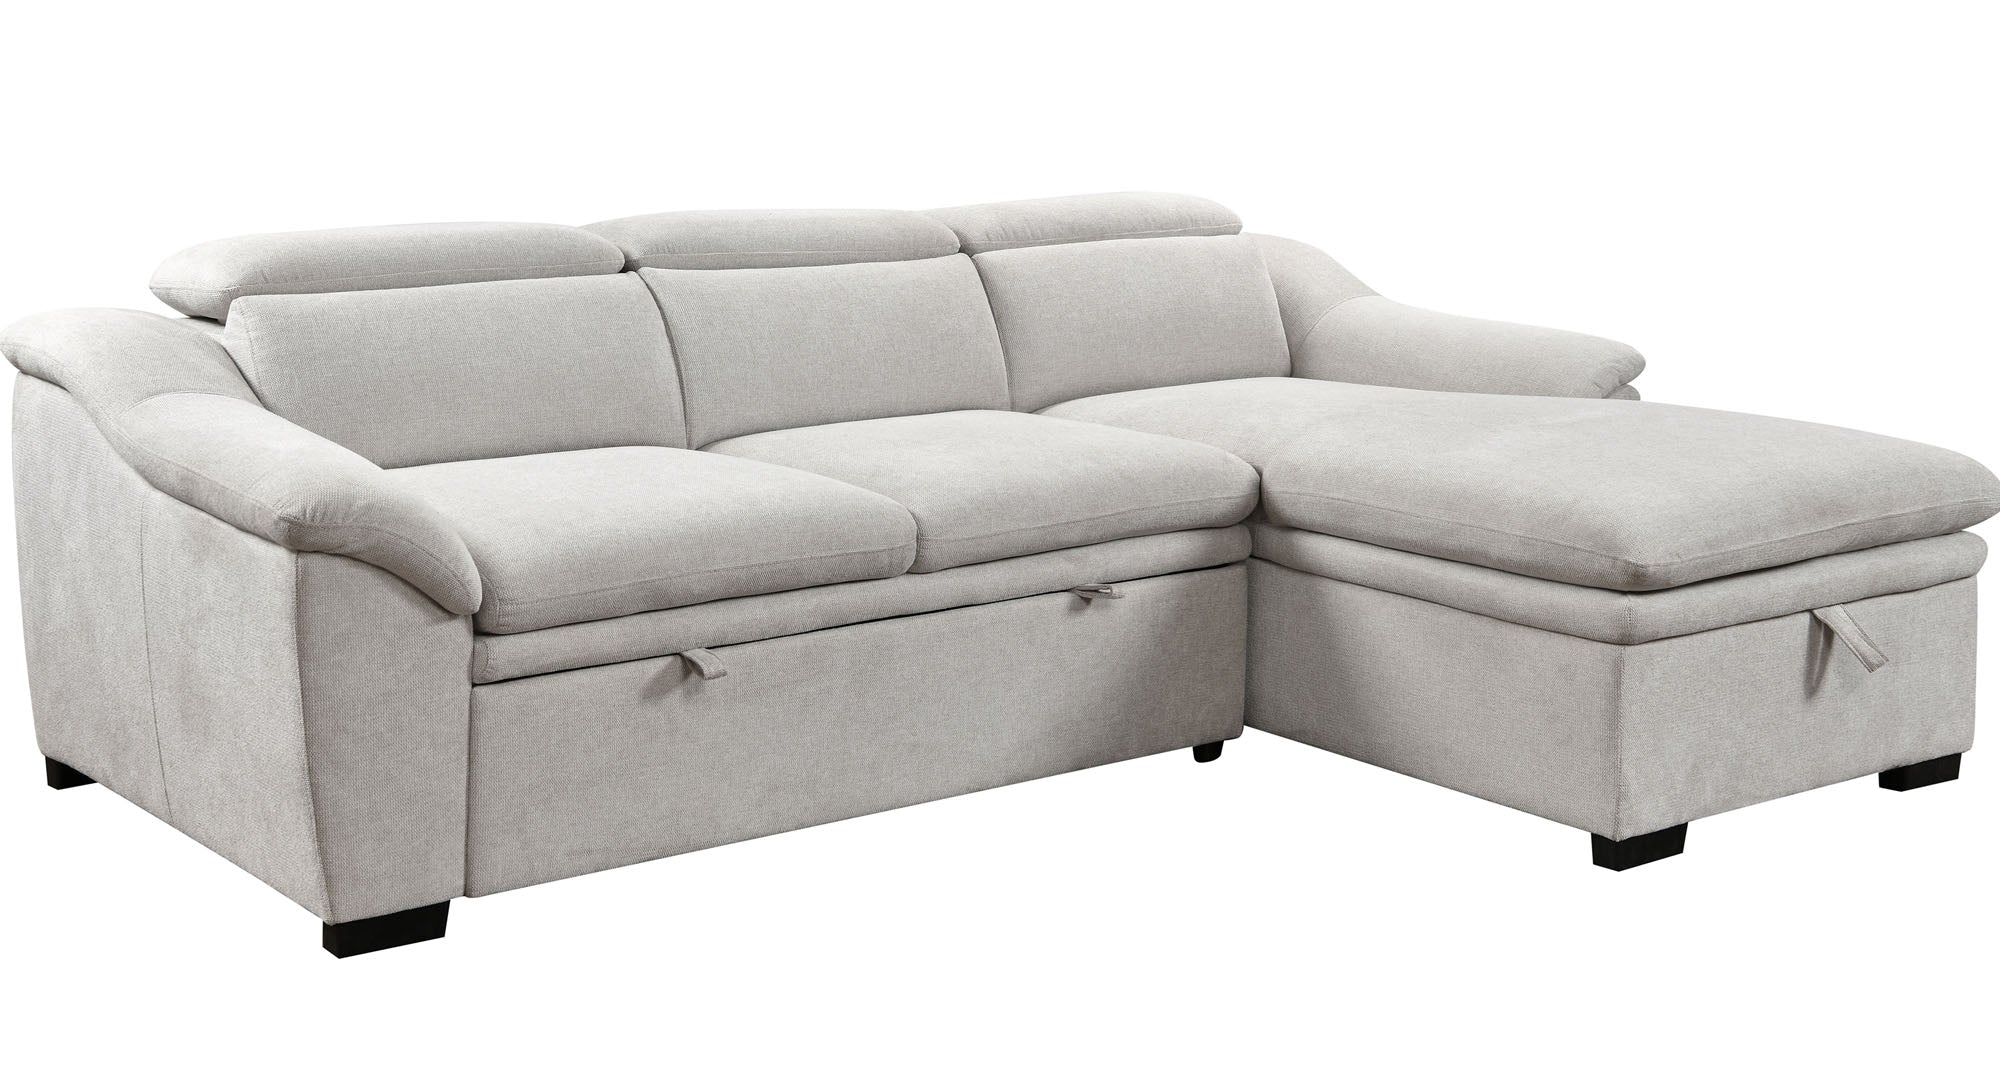 Zyon 2 Piece Sleeper Sectional - MJM Furniture